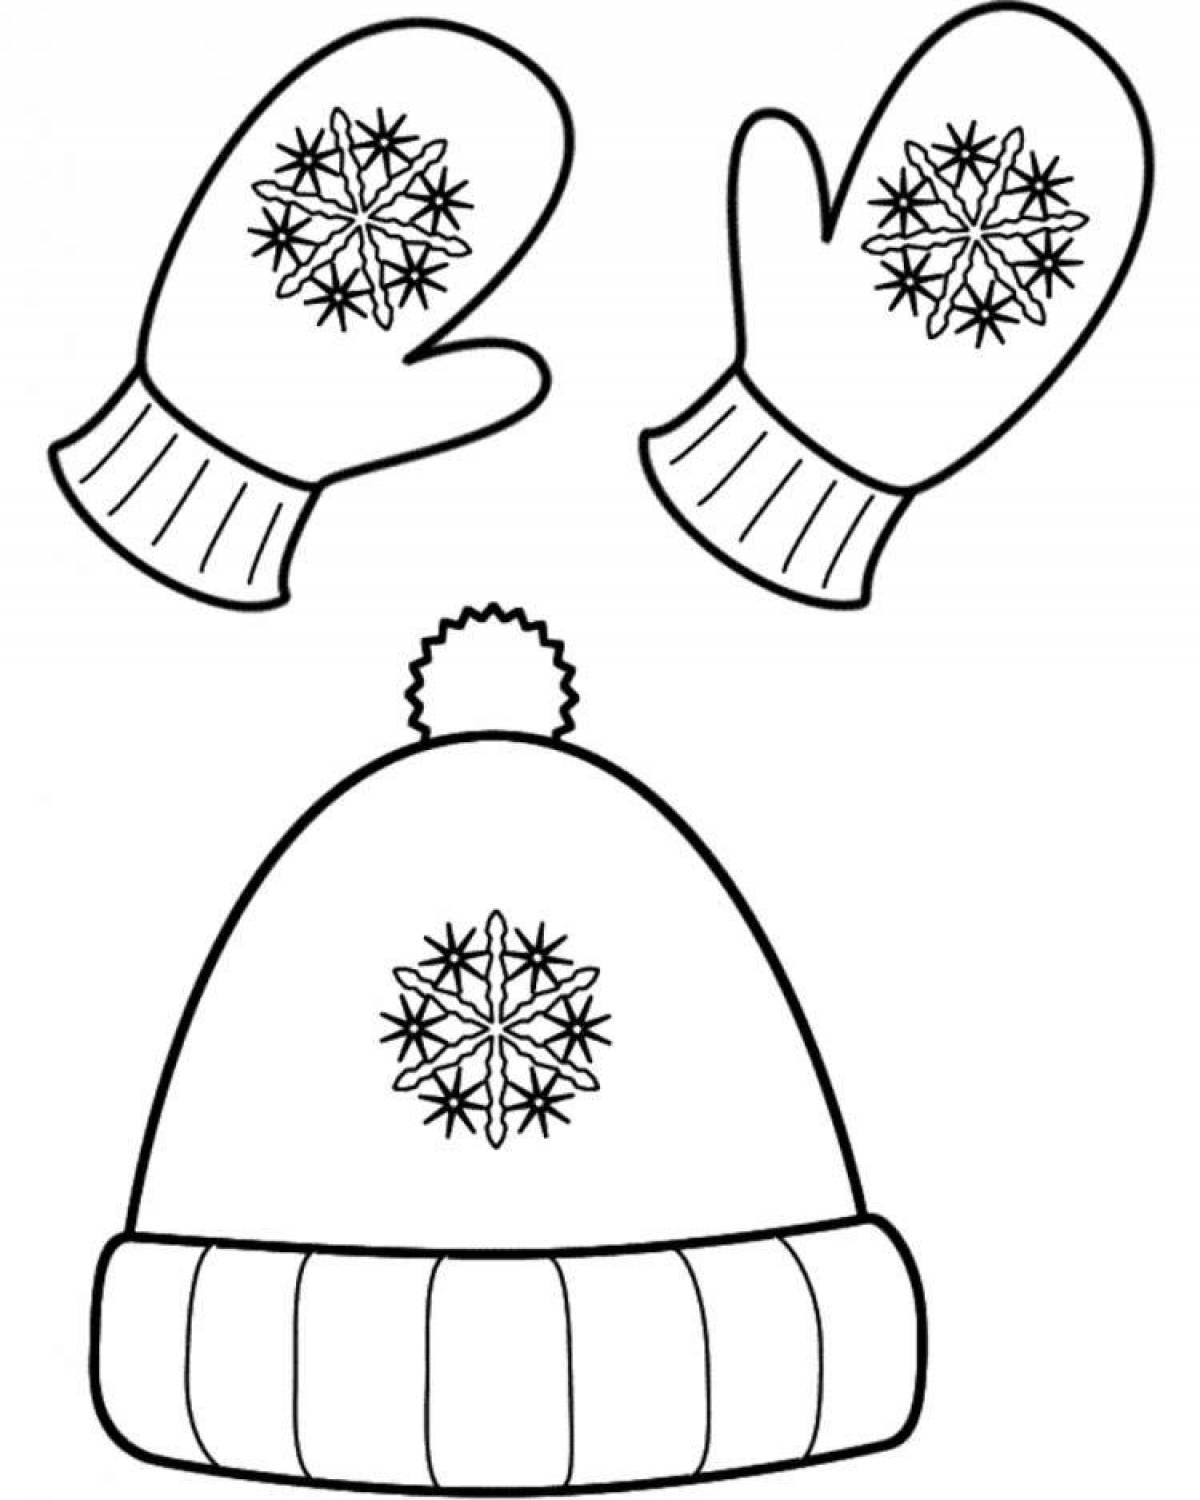 Winter hat #2